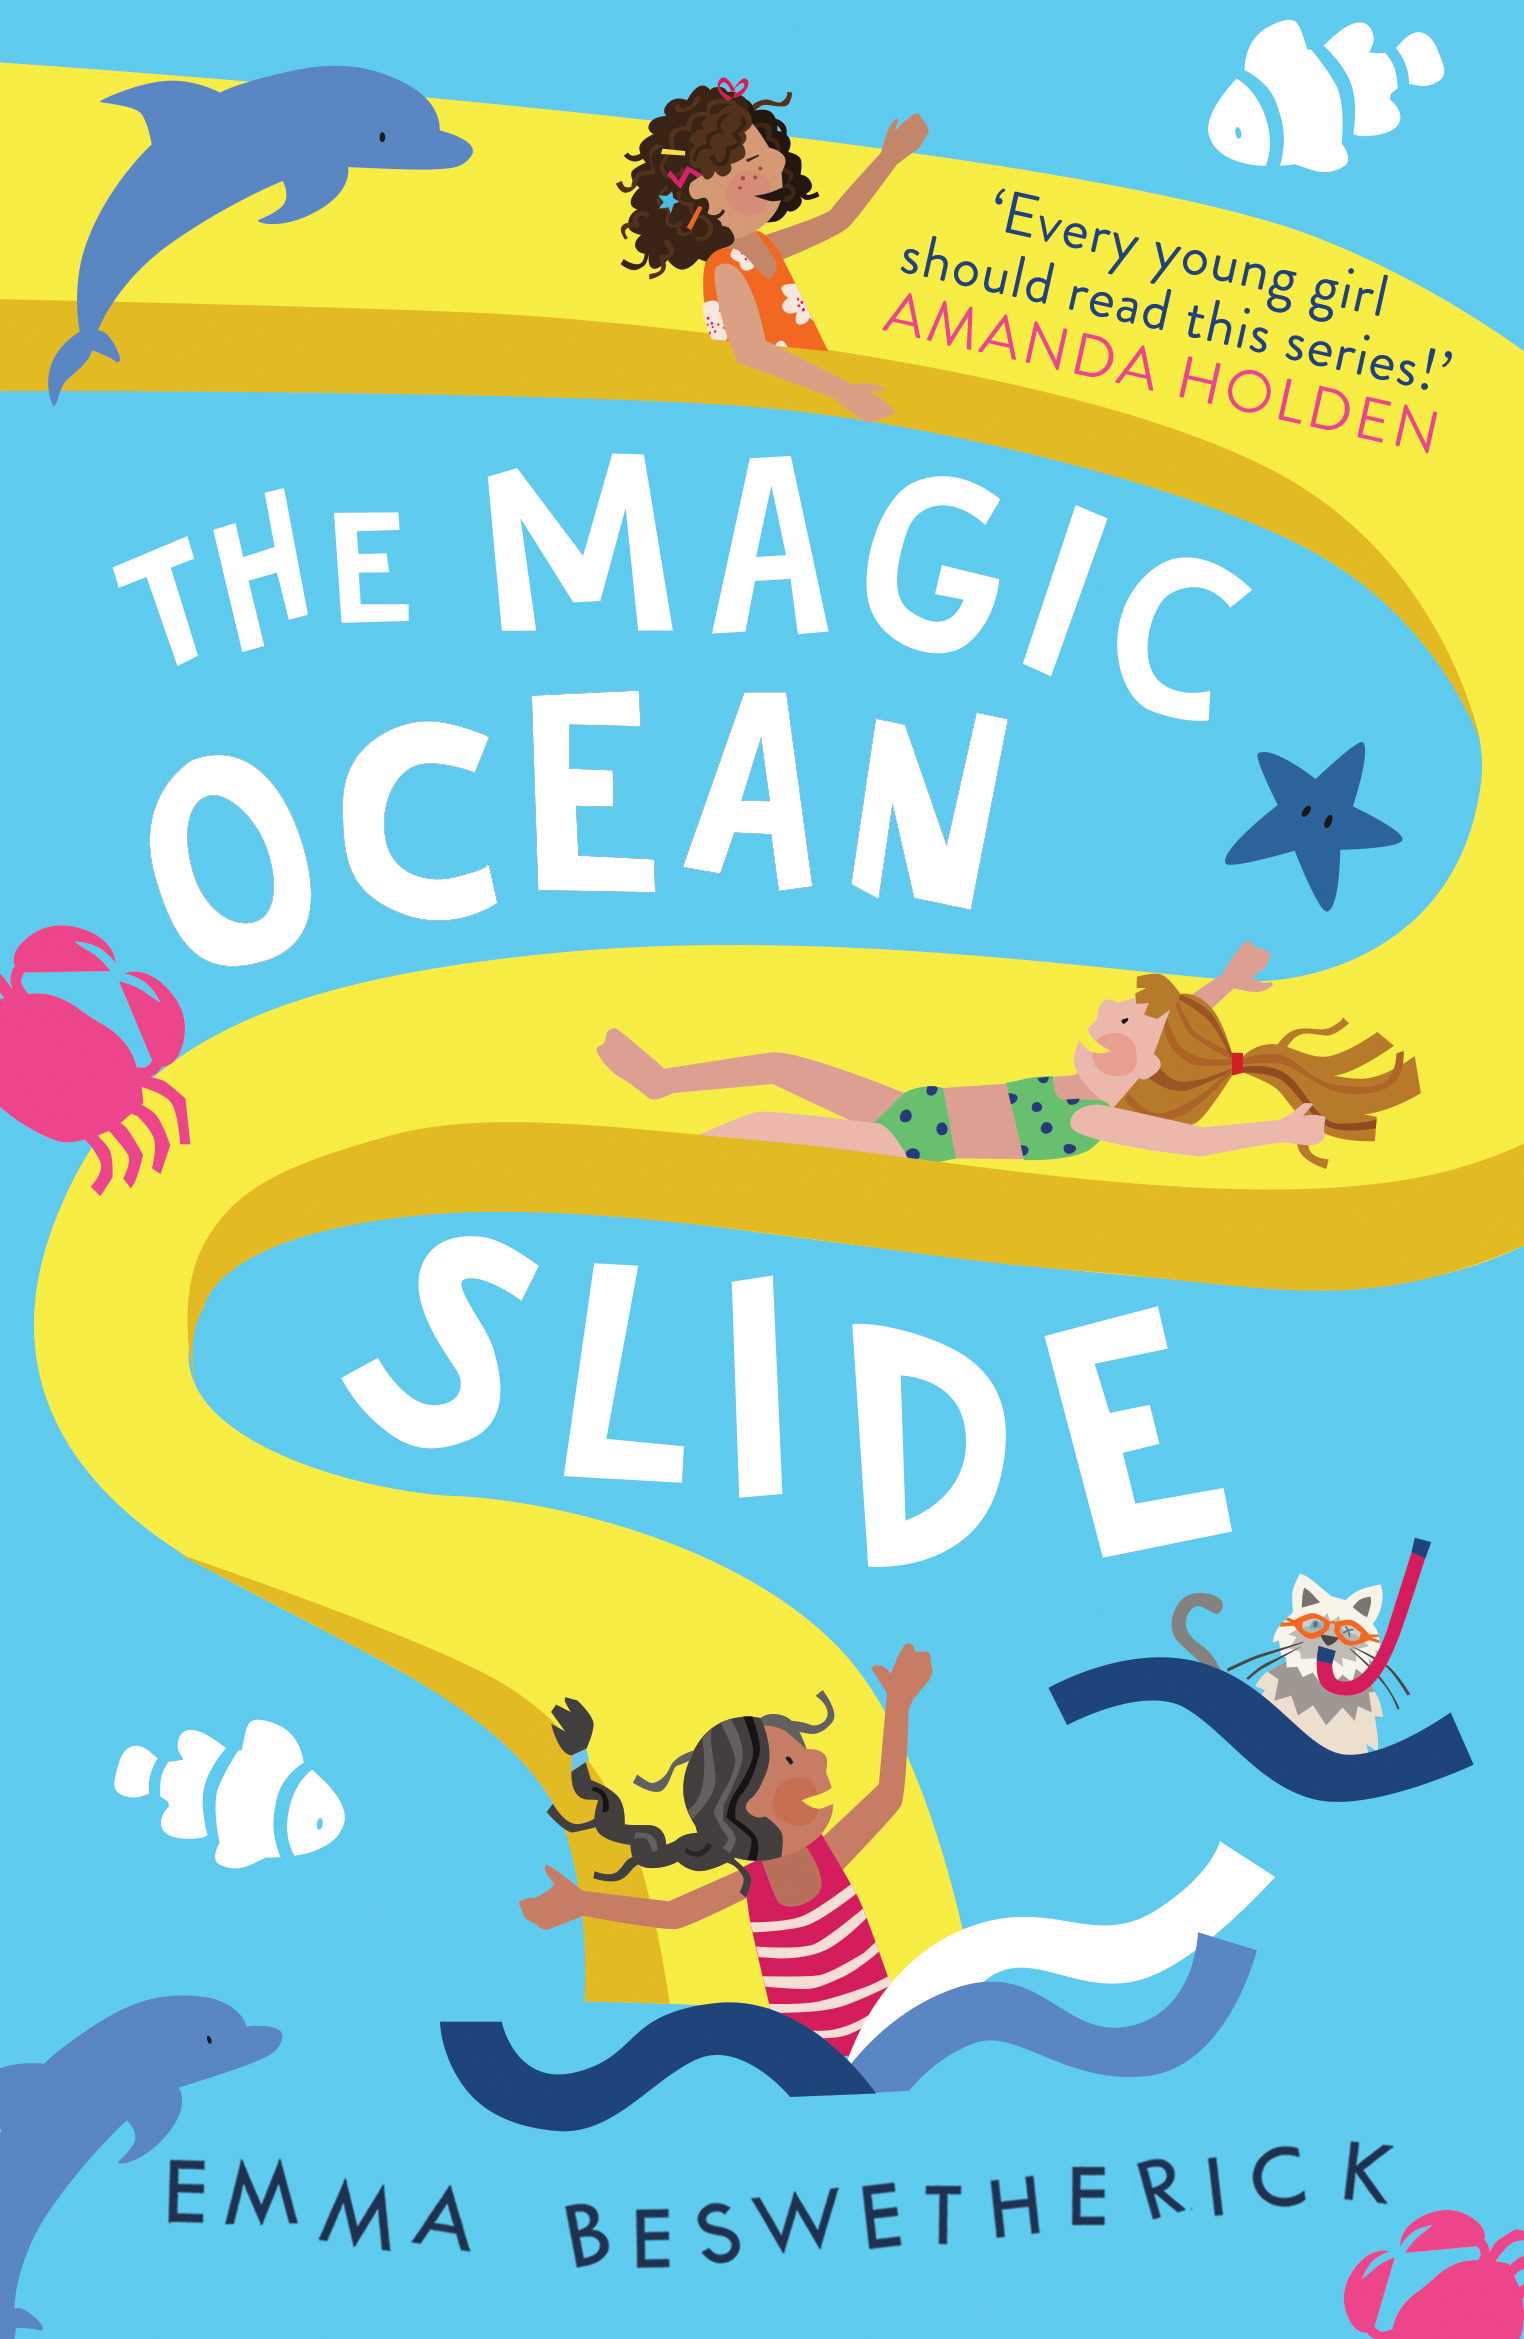 The Magic Ocean Slide